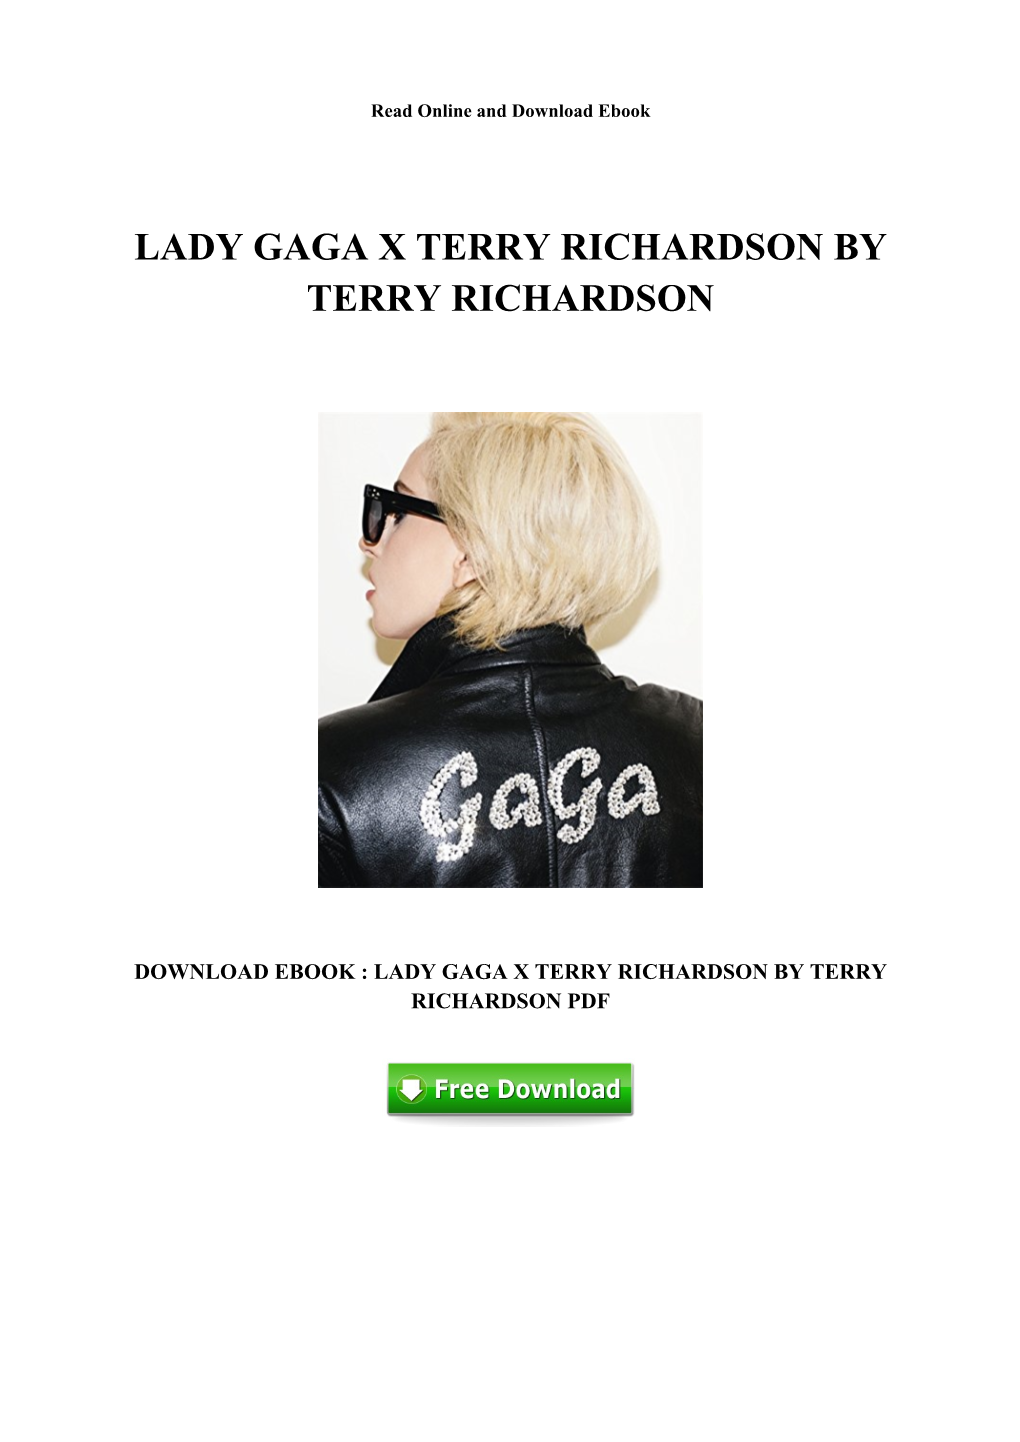 Lady Gaga X Terry Richardson by Terry Richardson